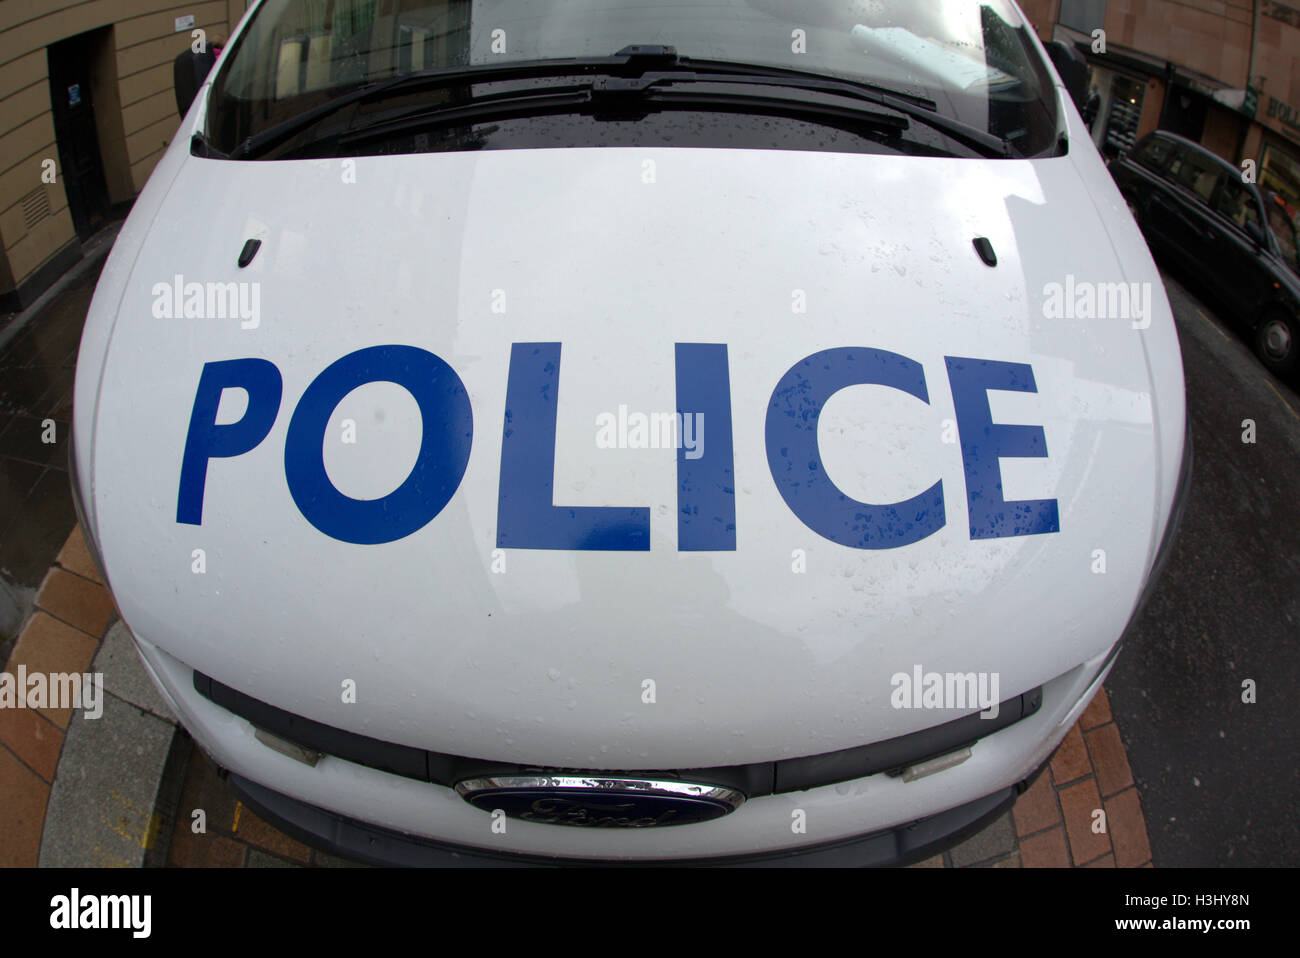 police  logo on vehicle bonnet smiley face Stock Photo